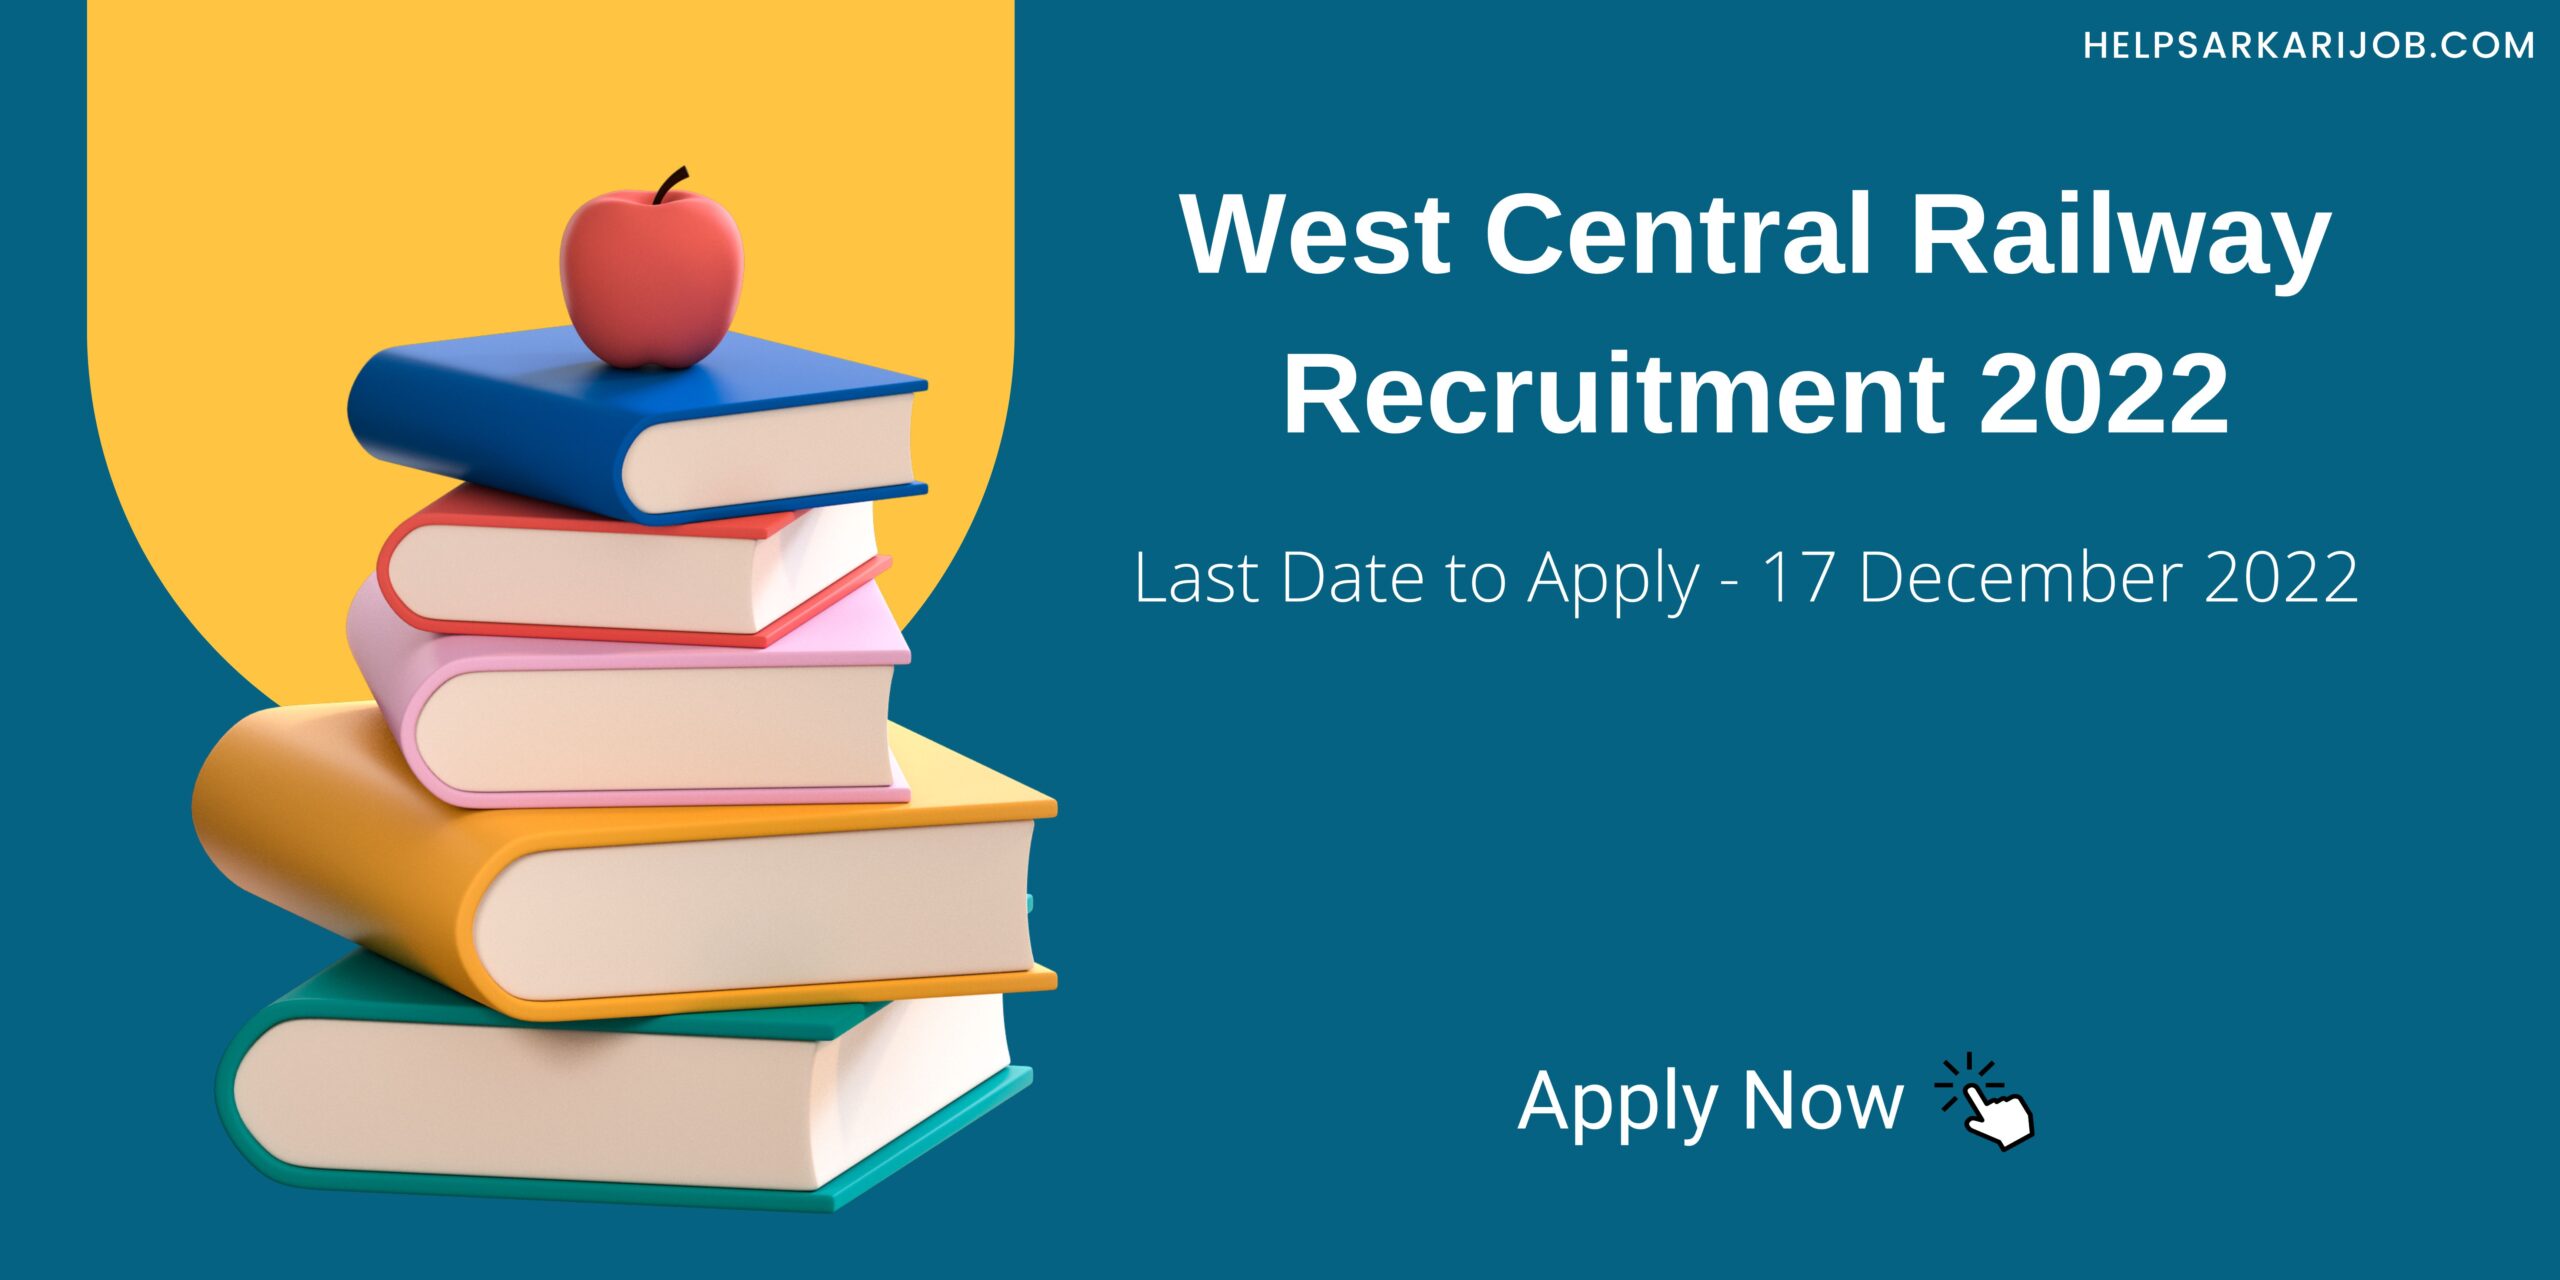 West Central Railway Recruitment 2022 last date